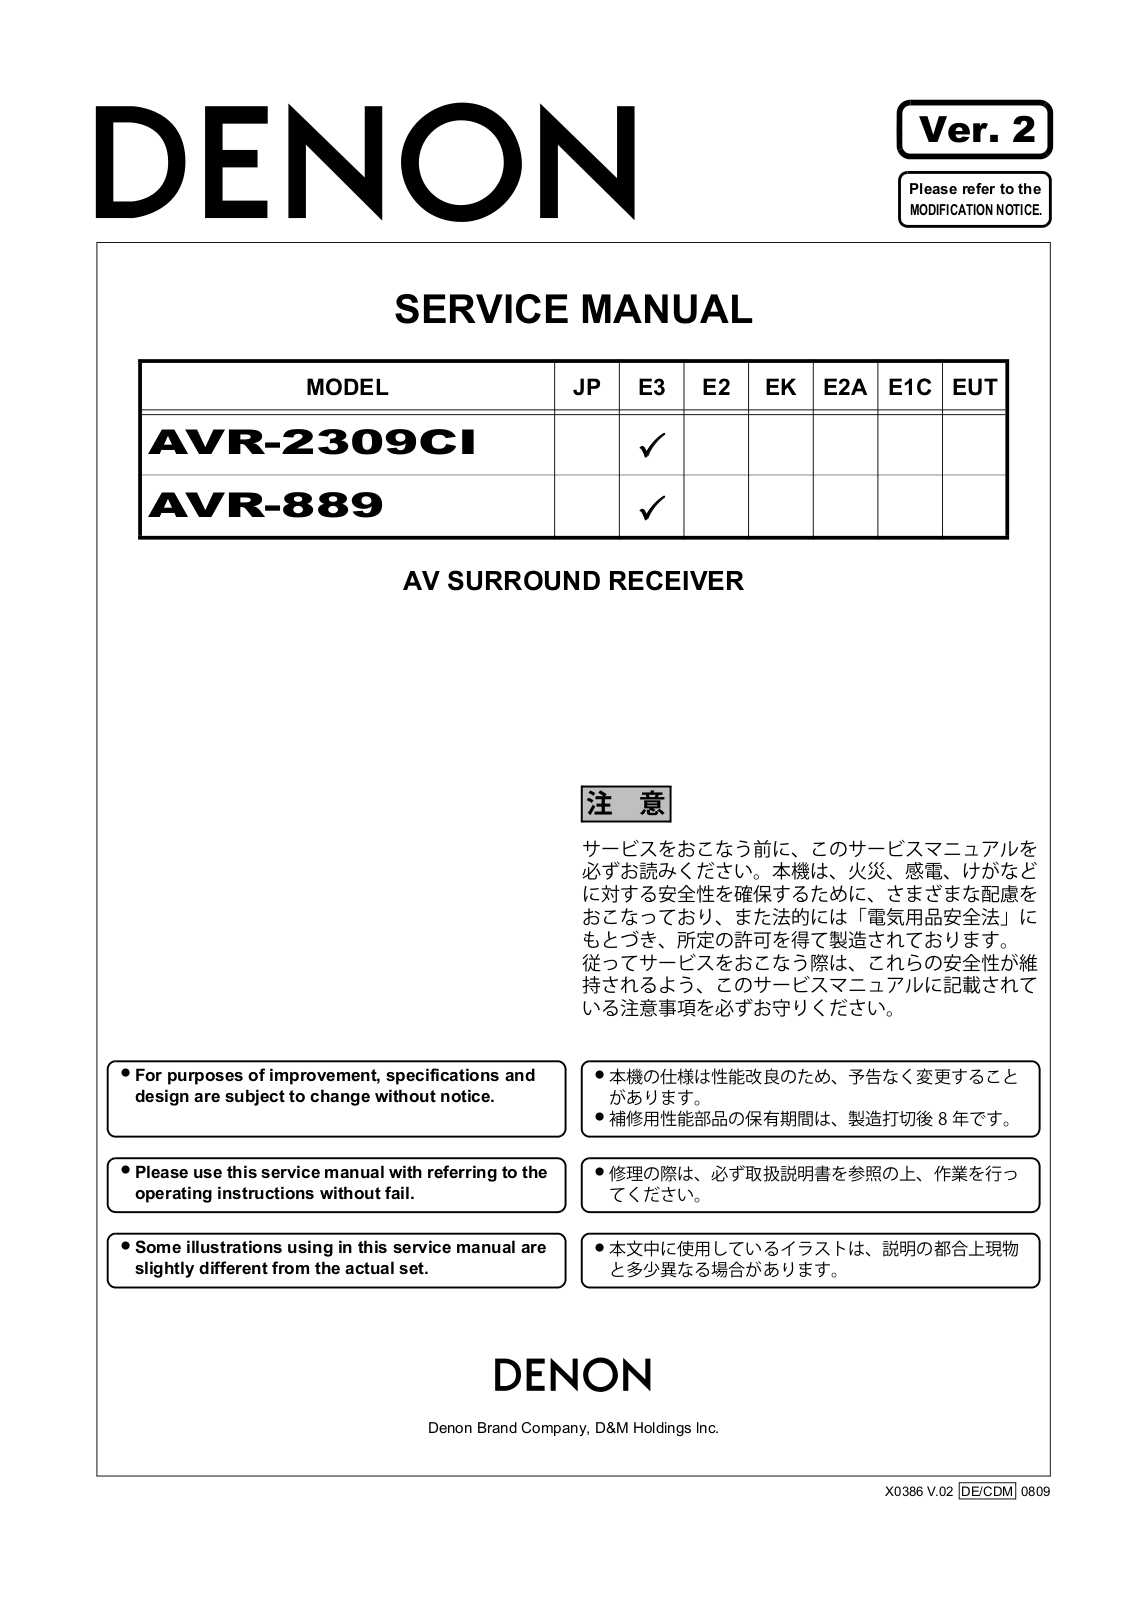 Denon AVR-2309, AVR-889 Schematic